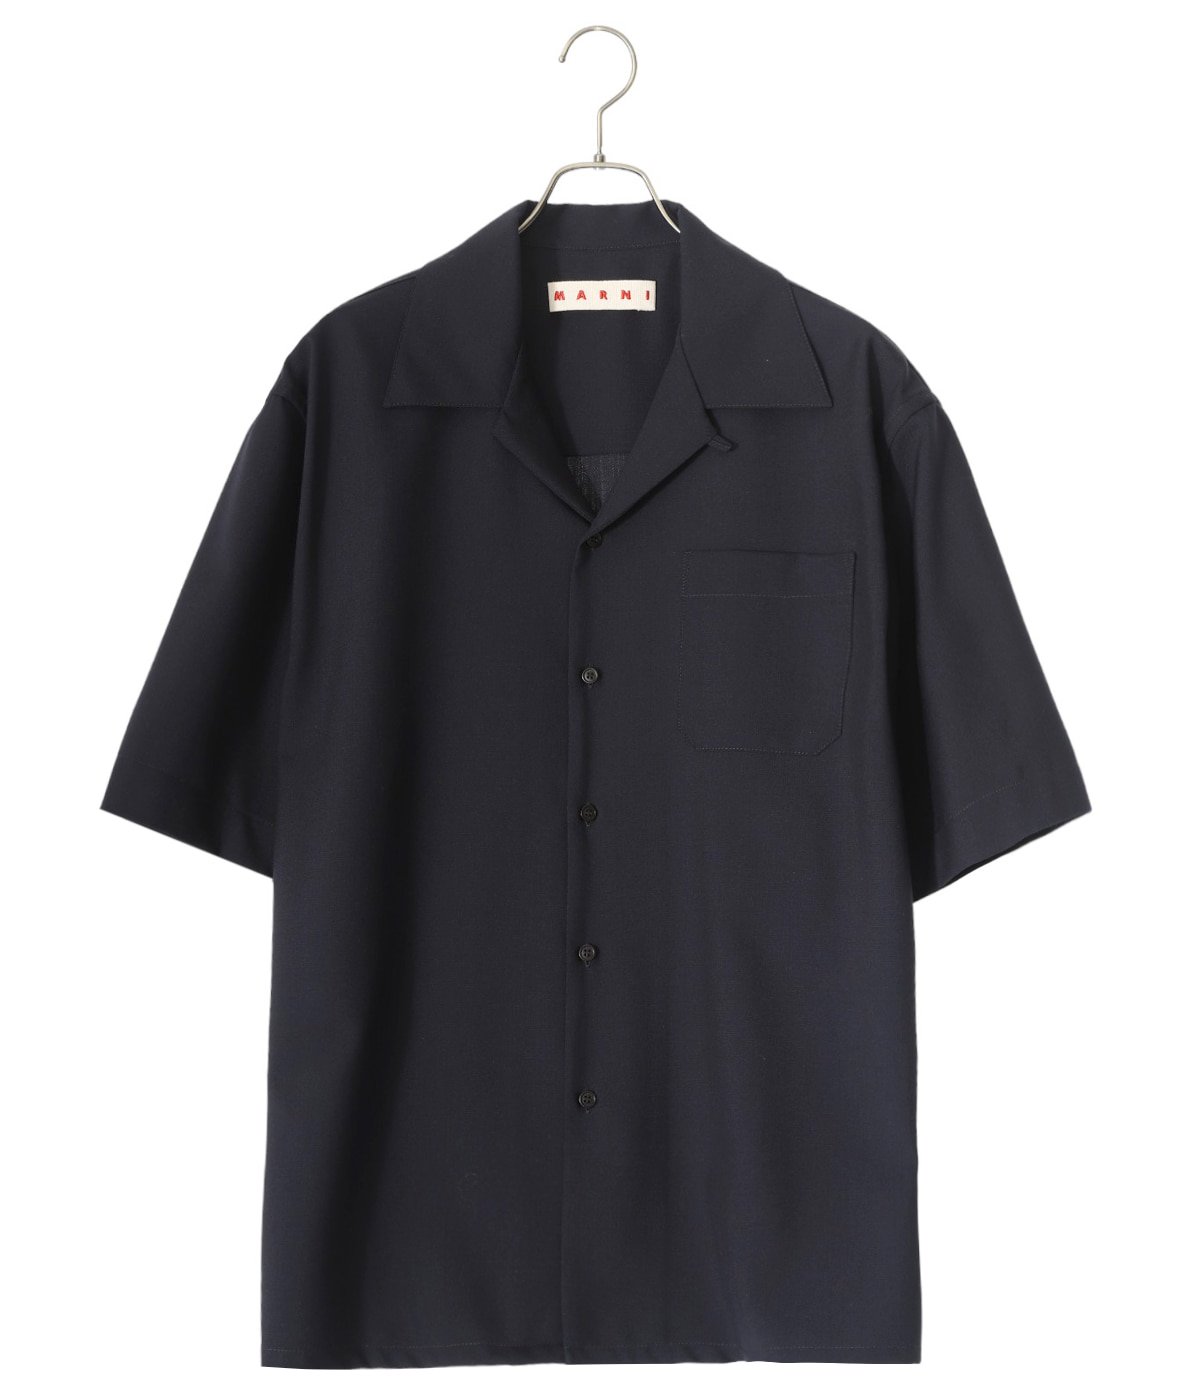 S/S SHIRT | MARNI(マルニ) / トップス 半袖シャツ (メンズ)の通販